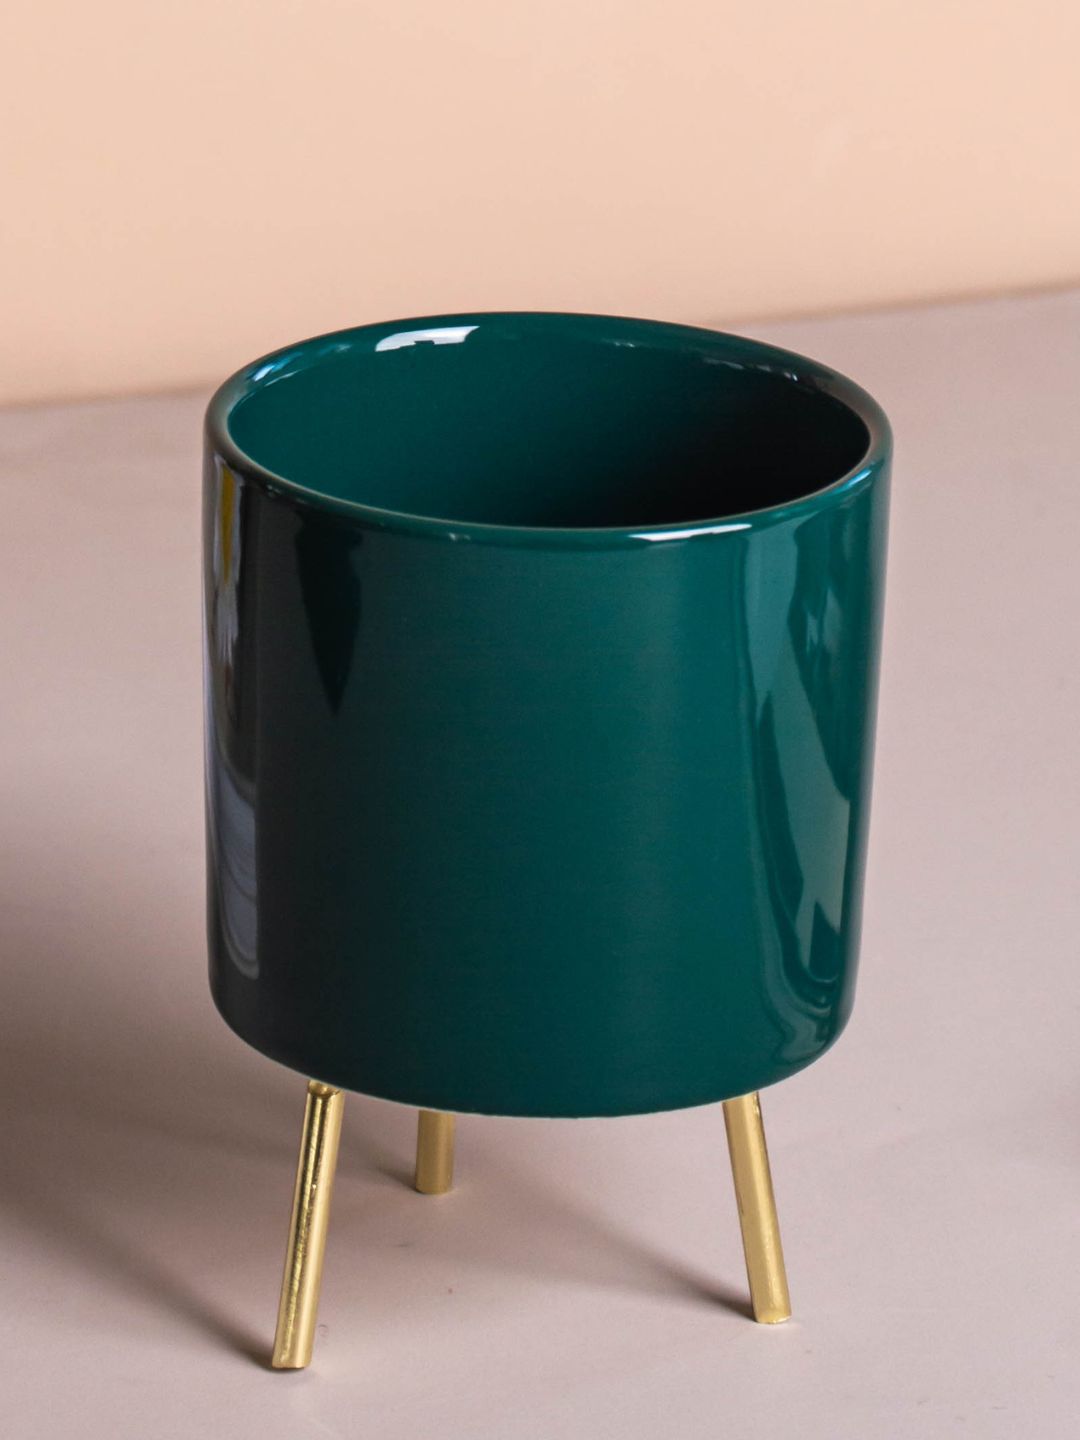 Nestasia Green & Gold-Toned Ceramic Solid Table Planter Price in India